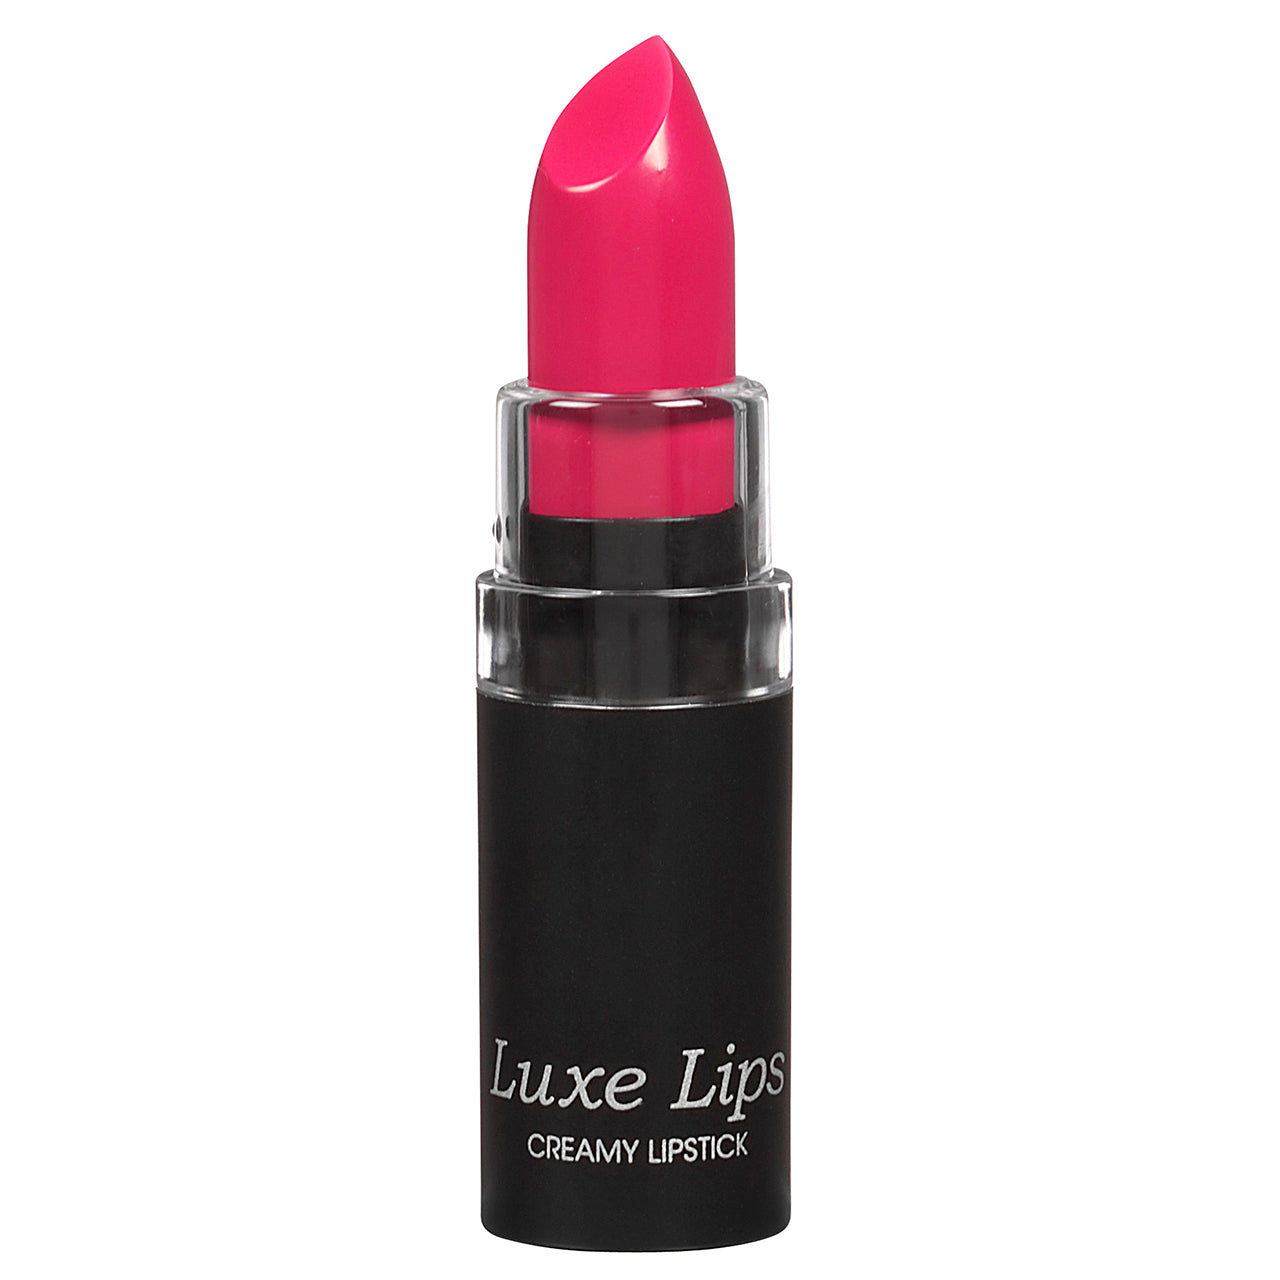 Styli-Style Luxe Lips Creamy Lipstick - Bombshell - ADDROS.COM